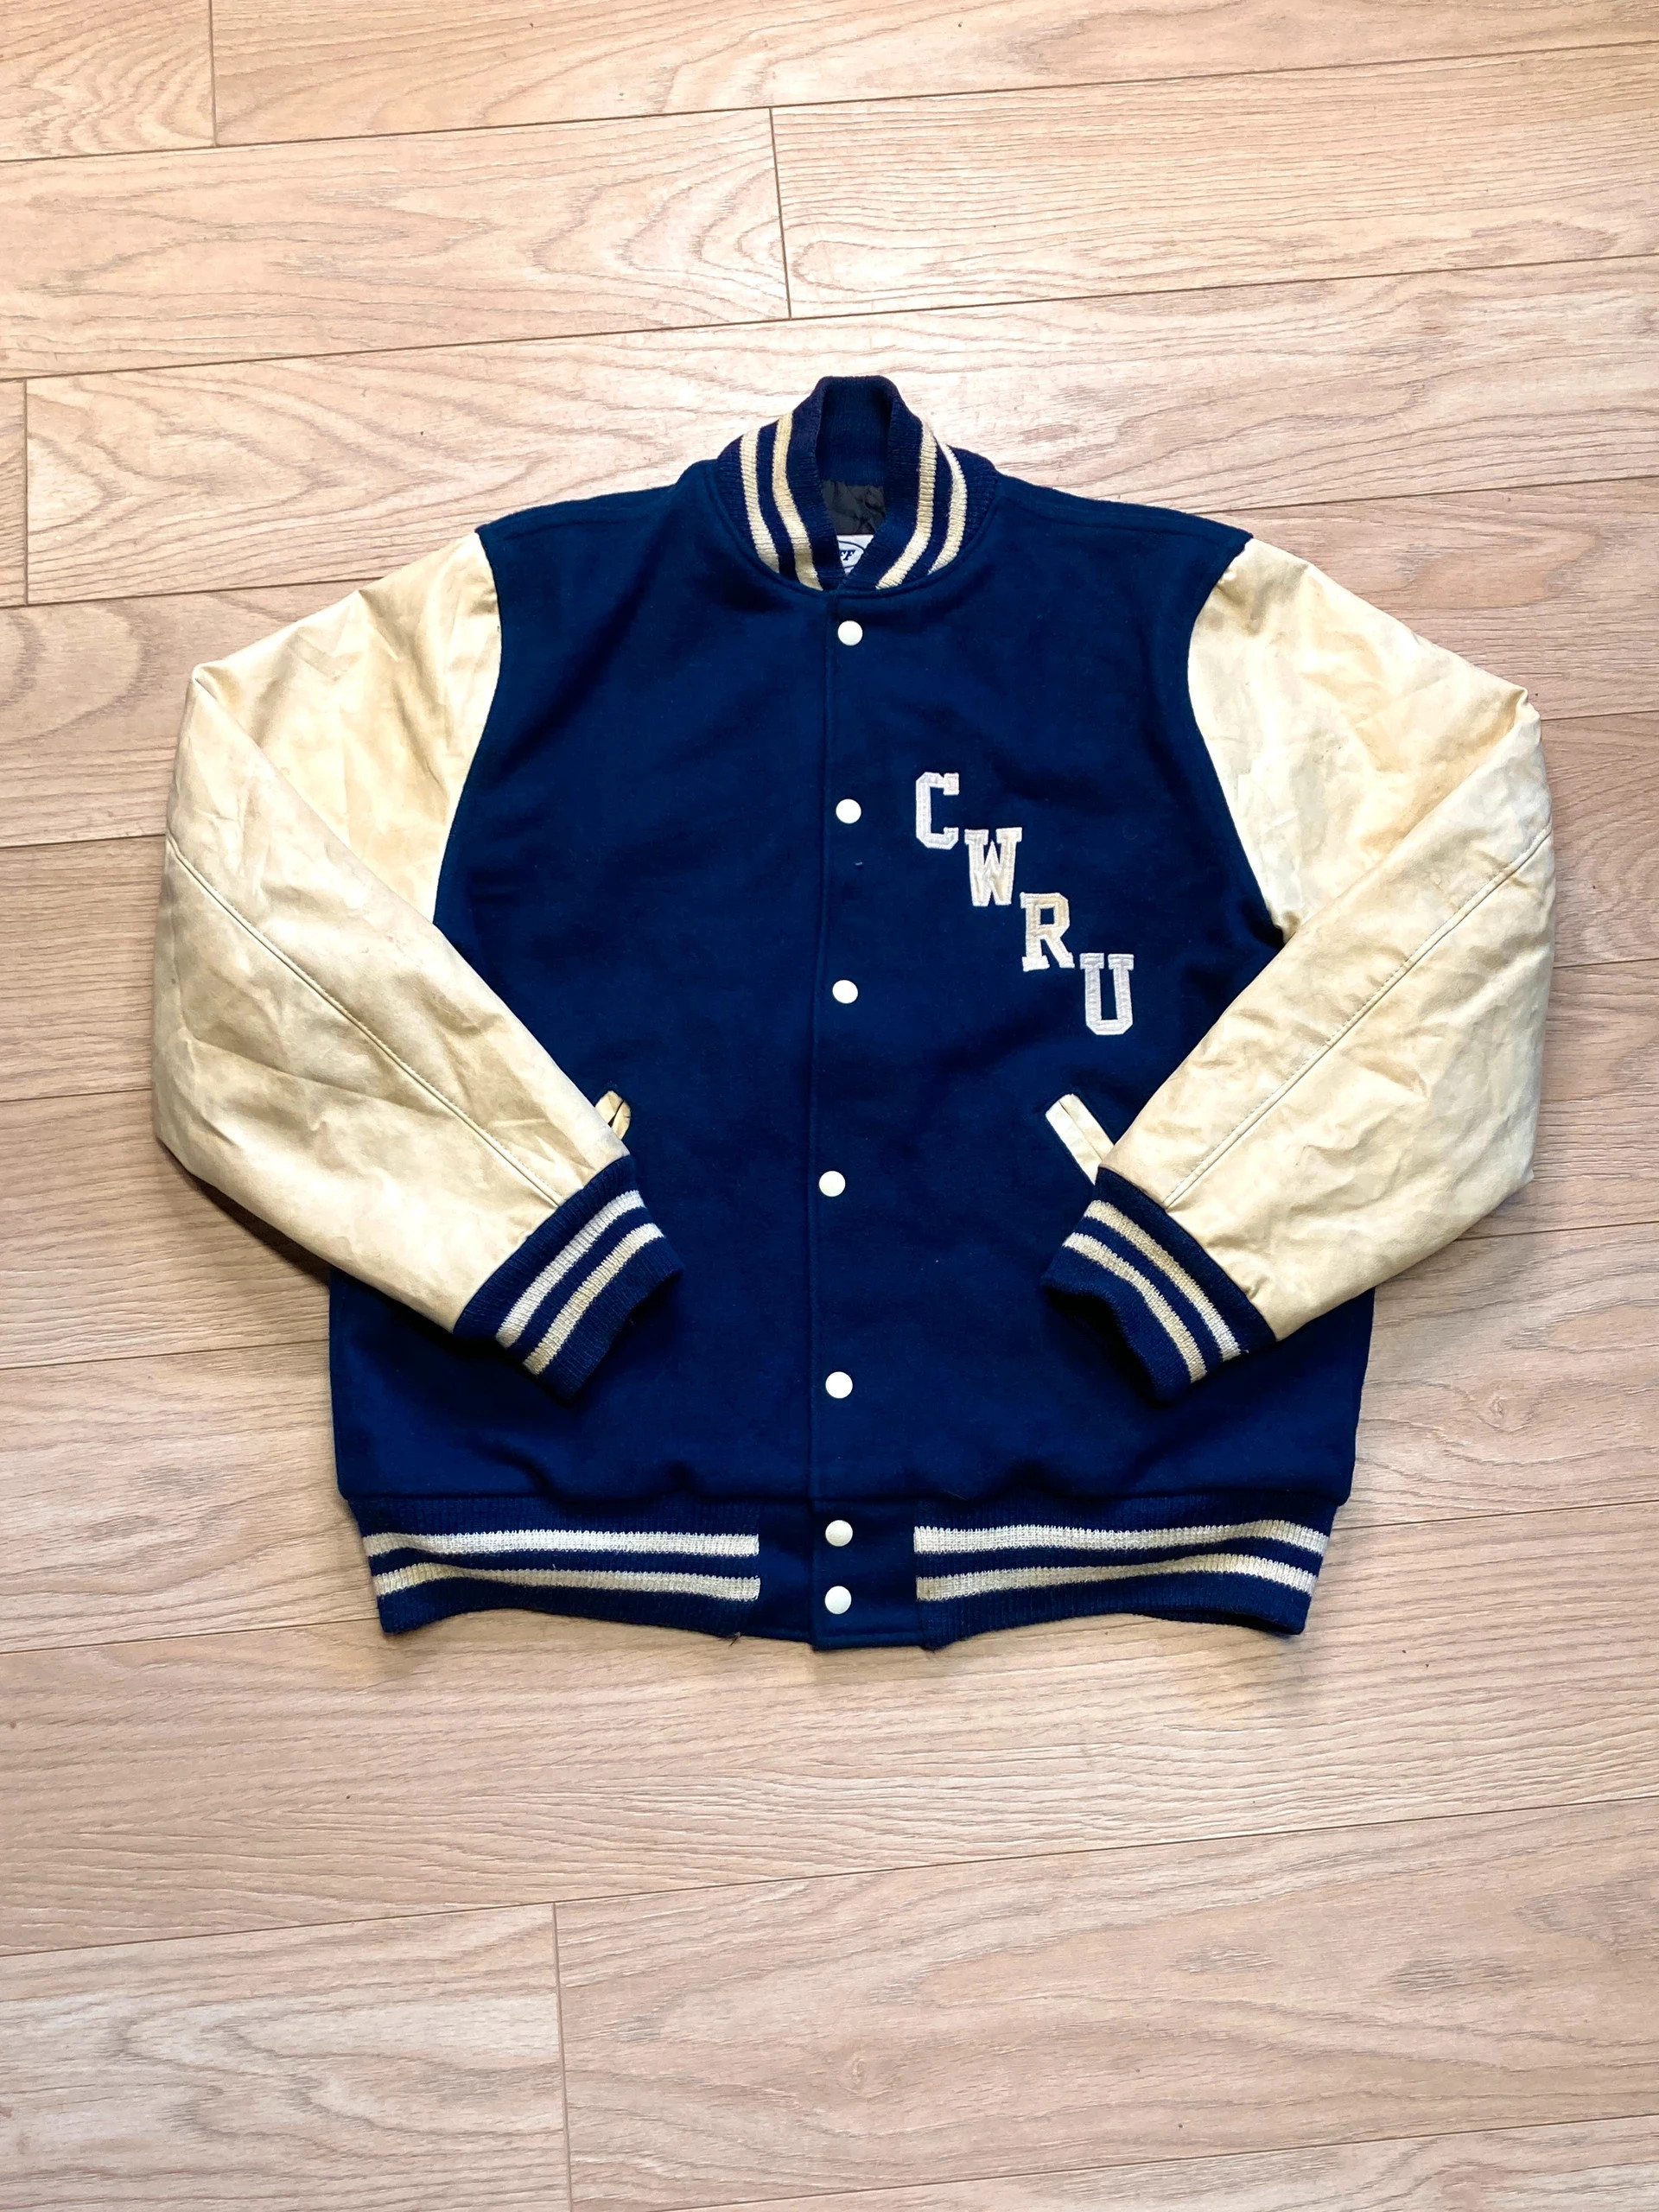 Blouson Carhartt (bomber jacket) / Vêtement d'occasion vintage friperie